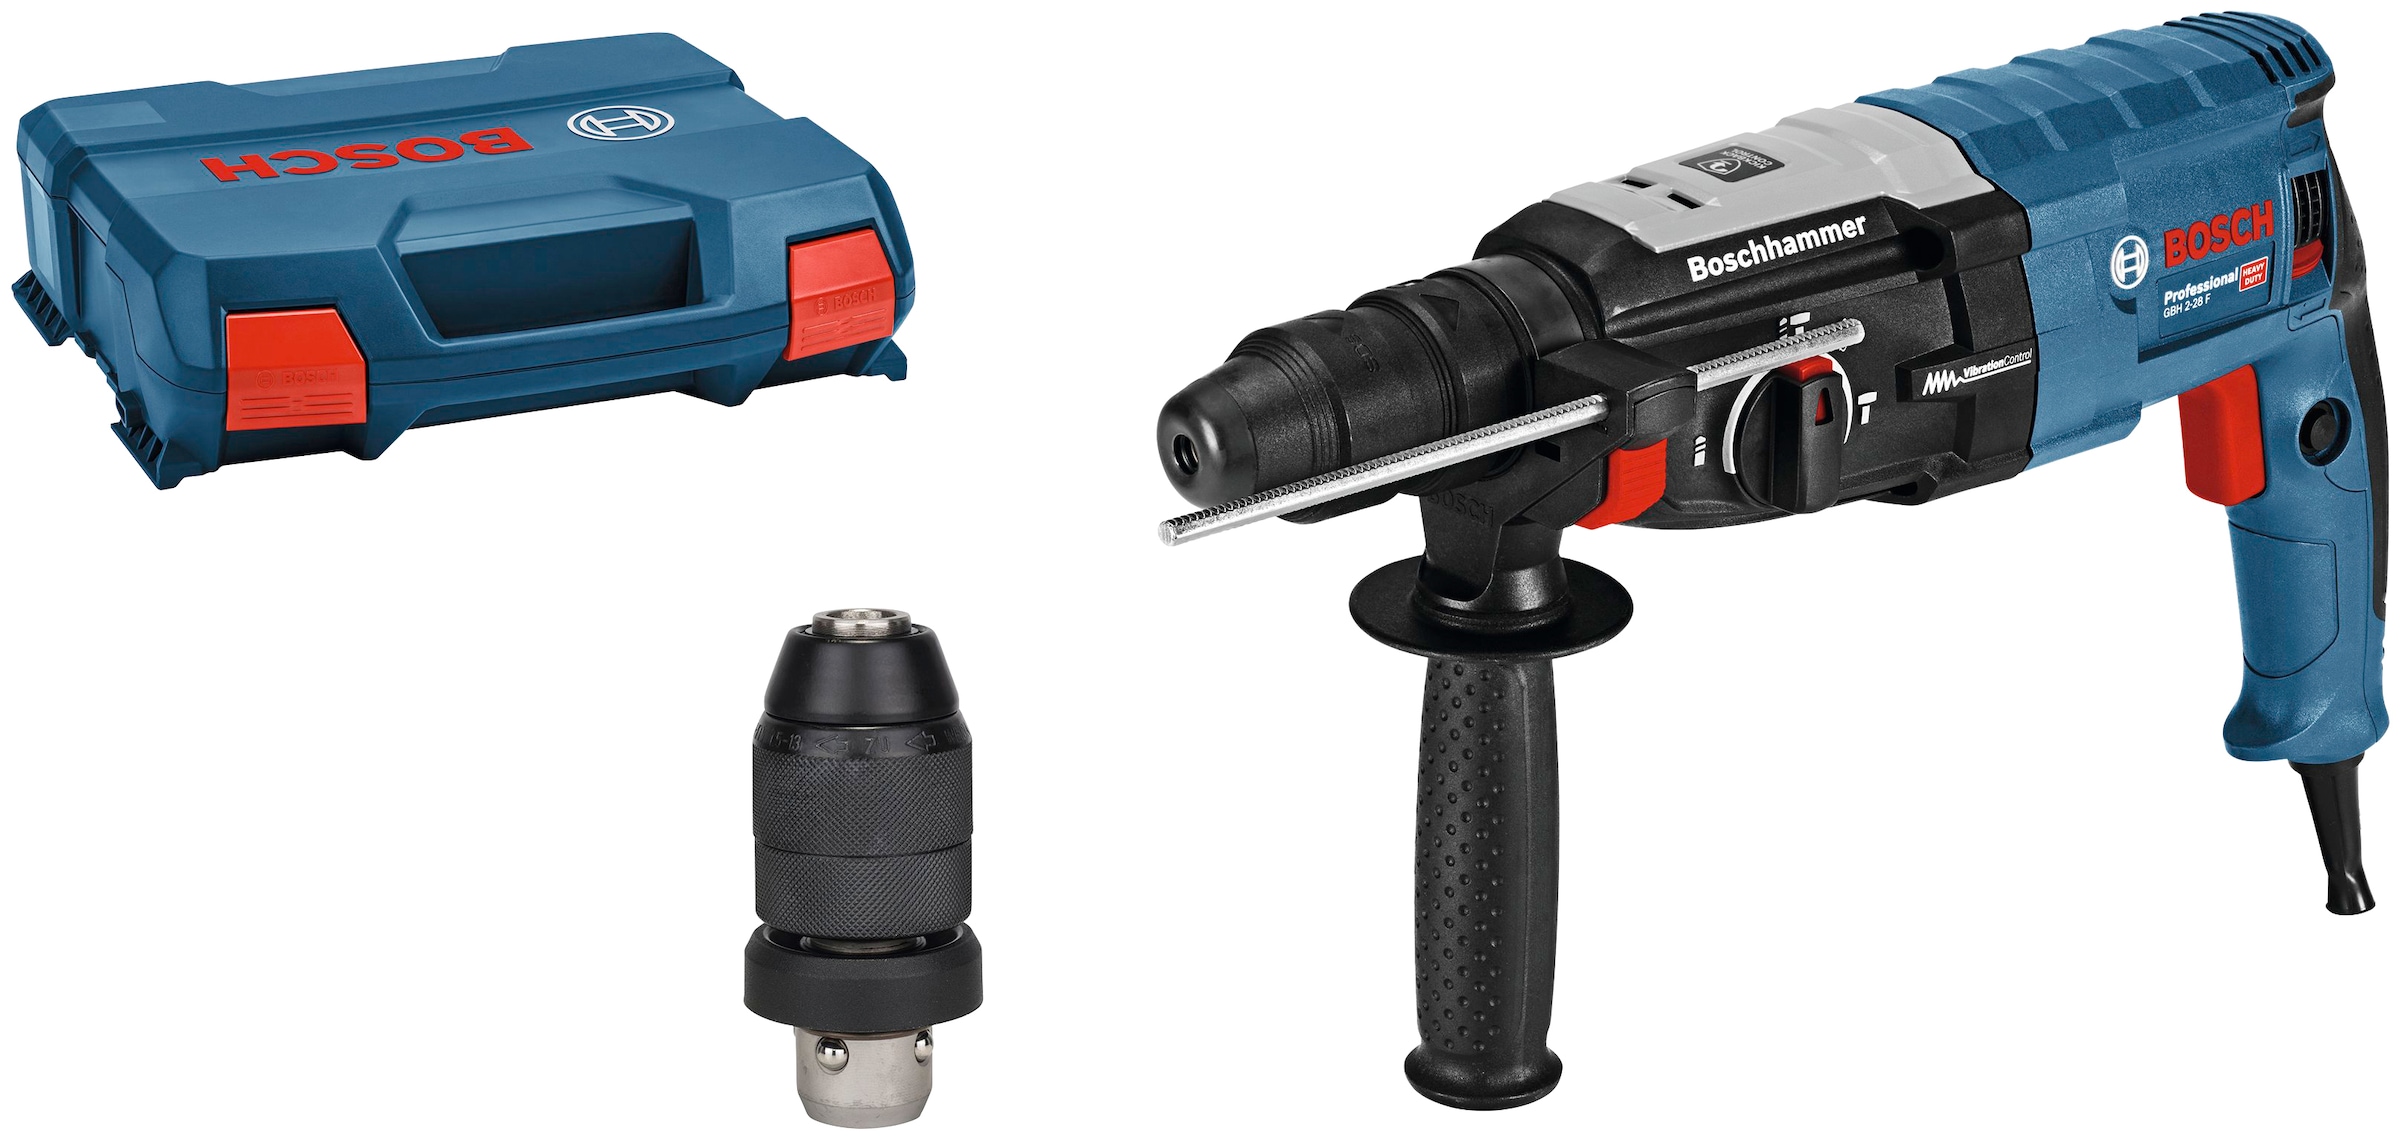 | F günstig Bohrhammer Professional«, Vario-Lock, mit BAUR (1 2-28 »GBH tlg.), Professional plus Bosch SDS